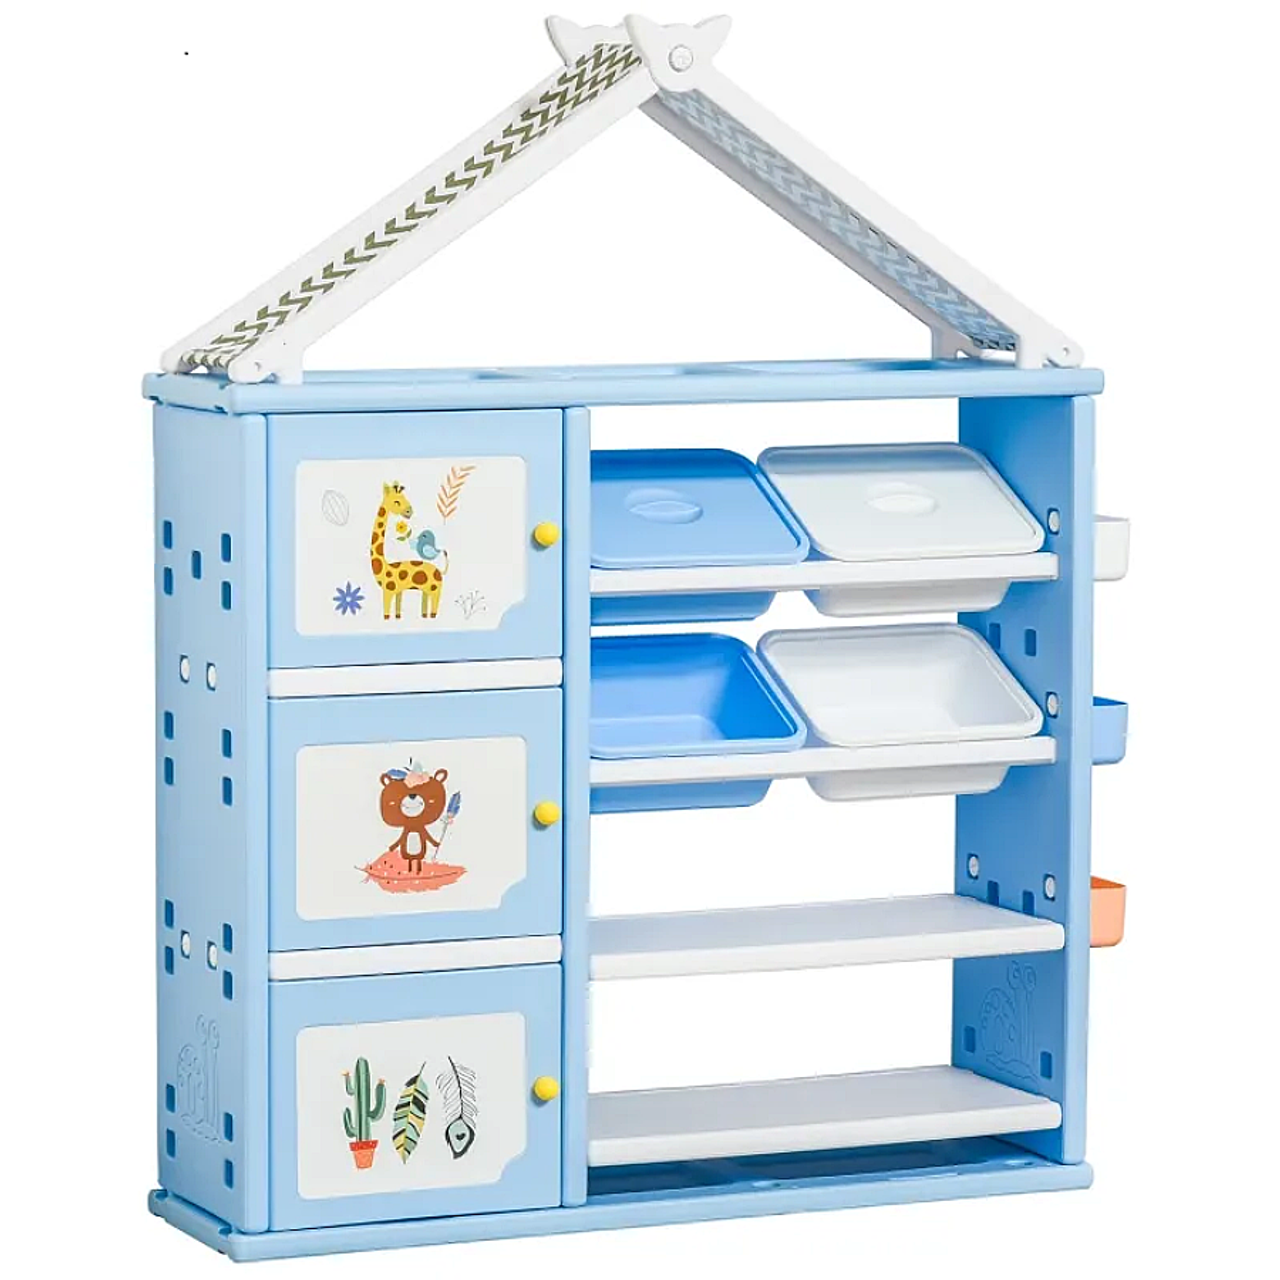 Qaba® Kids' Toy Organizer & Storage Book Shelf with Multiple Storage Spaces product image